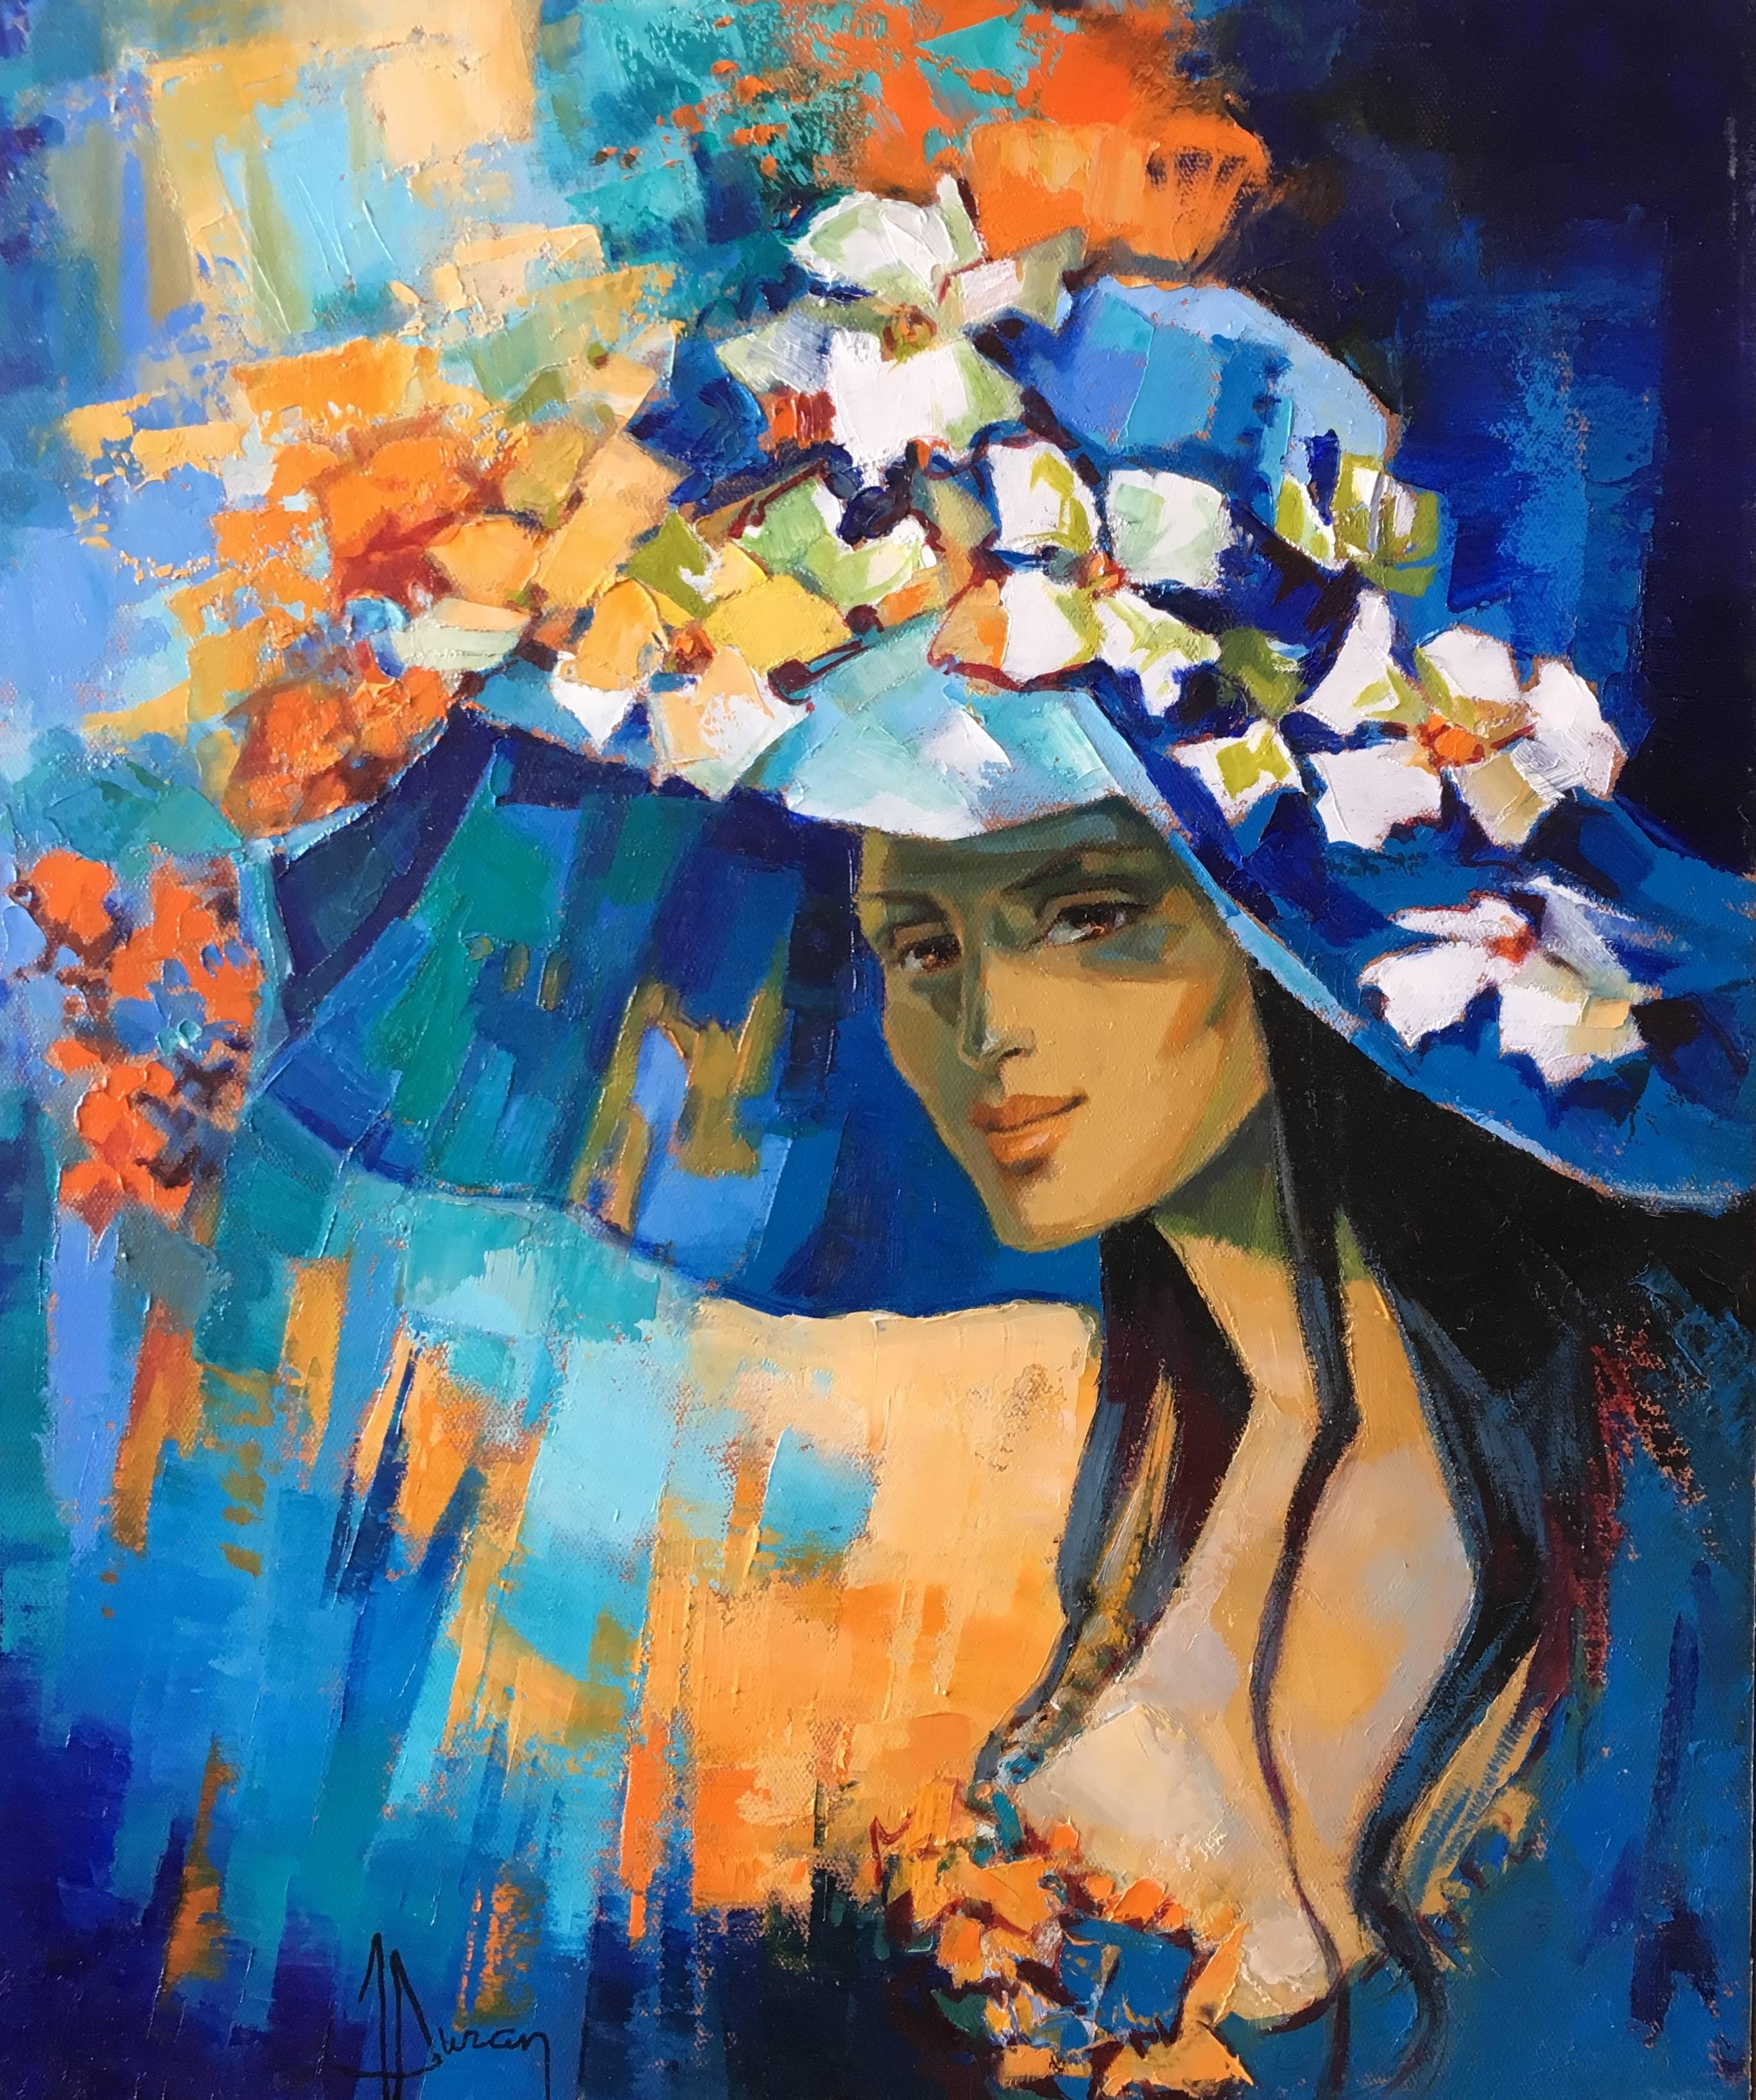 Jori Duran Portrait Painting – The blue pamela hat, expressionist style  oil painting